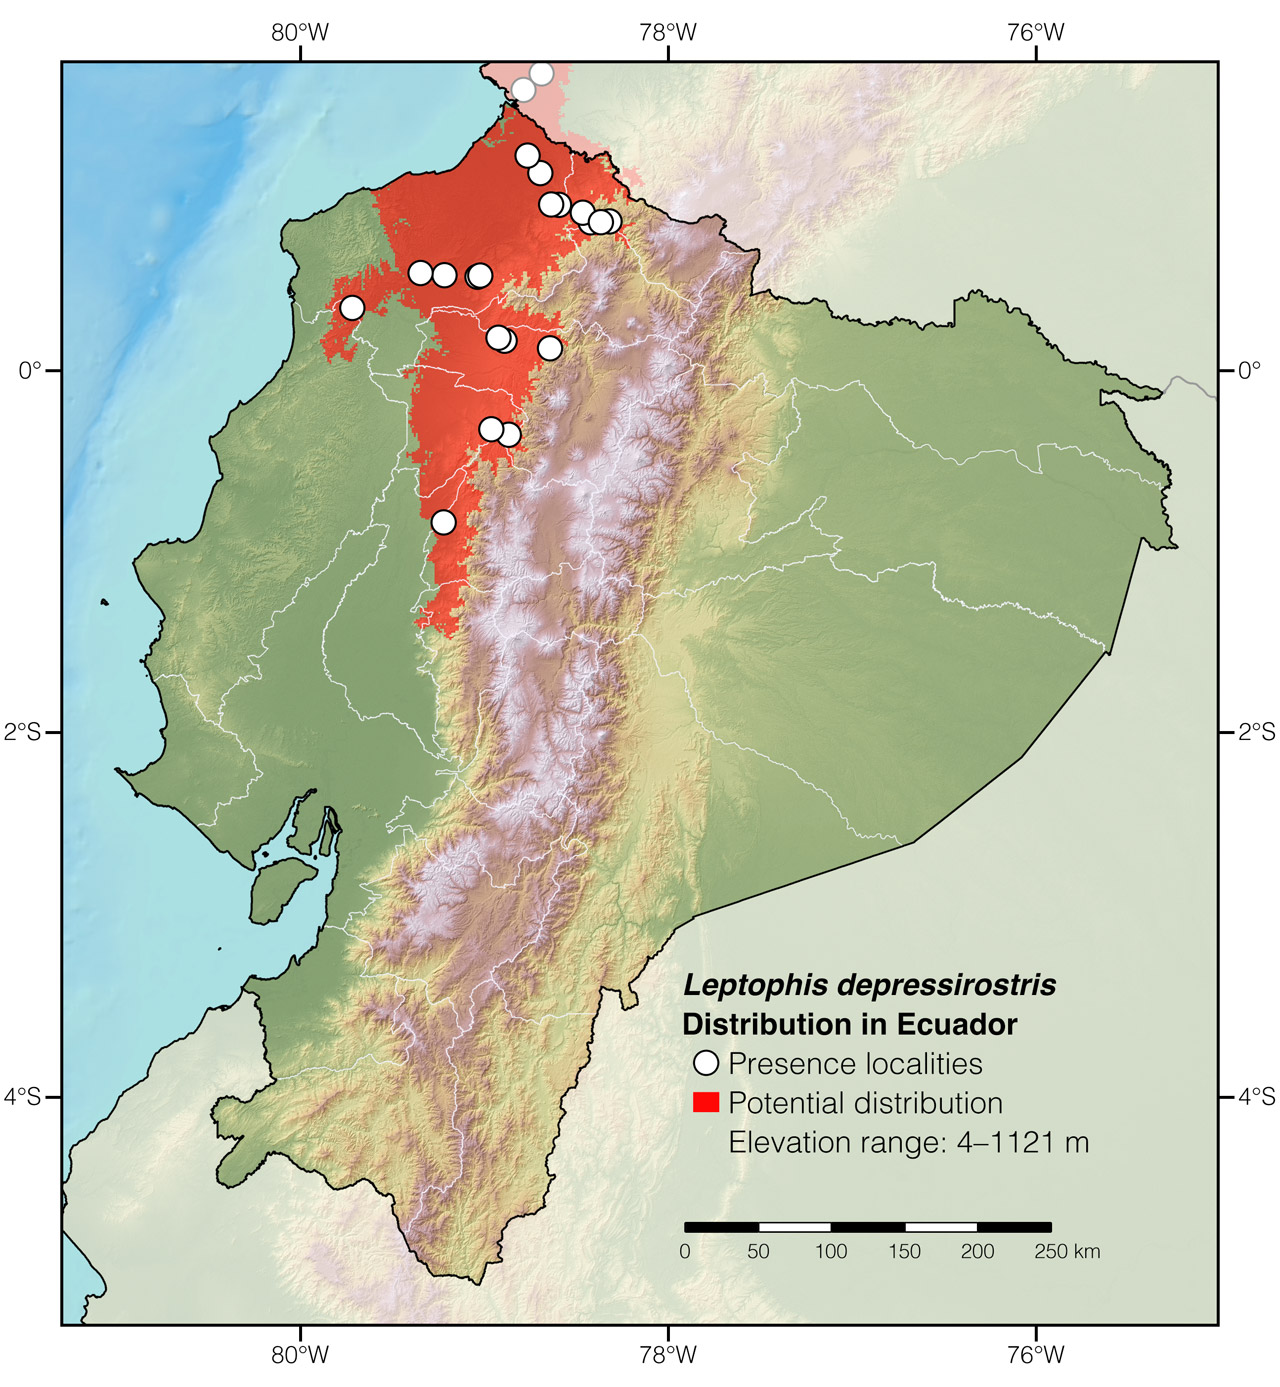 Distribution of Leptophis depressirostris in Ecuador